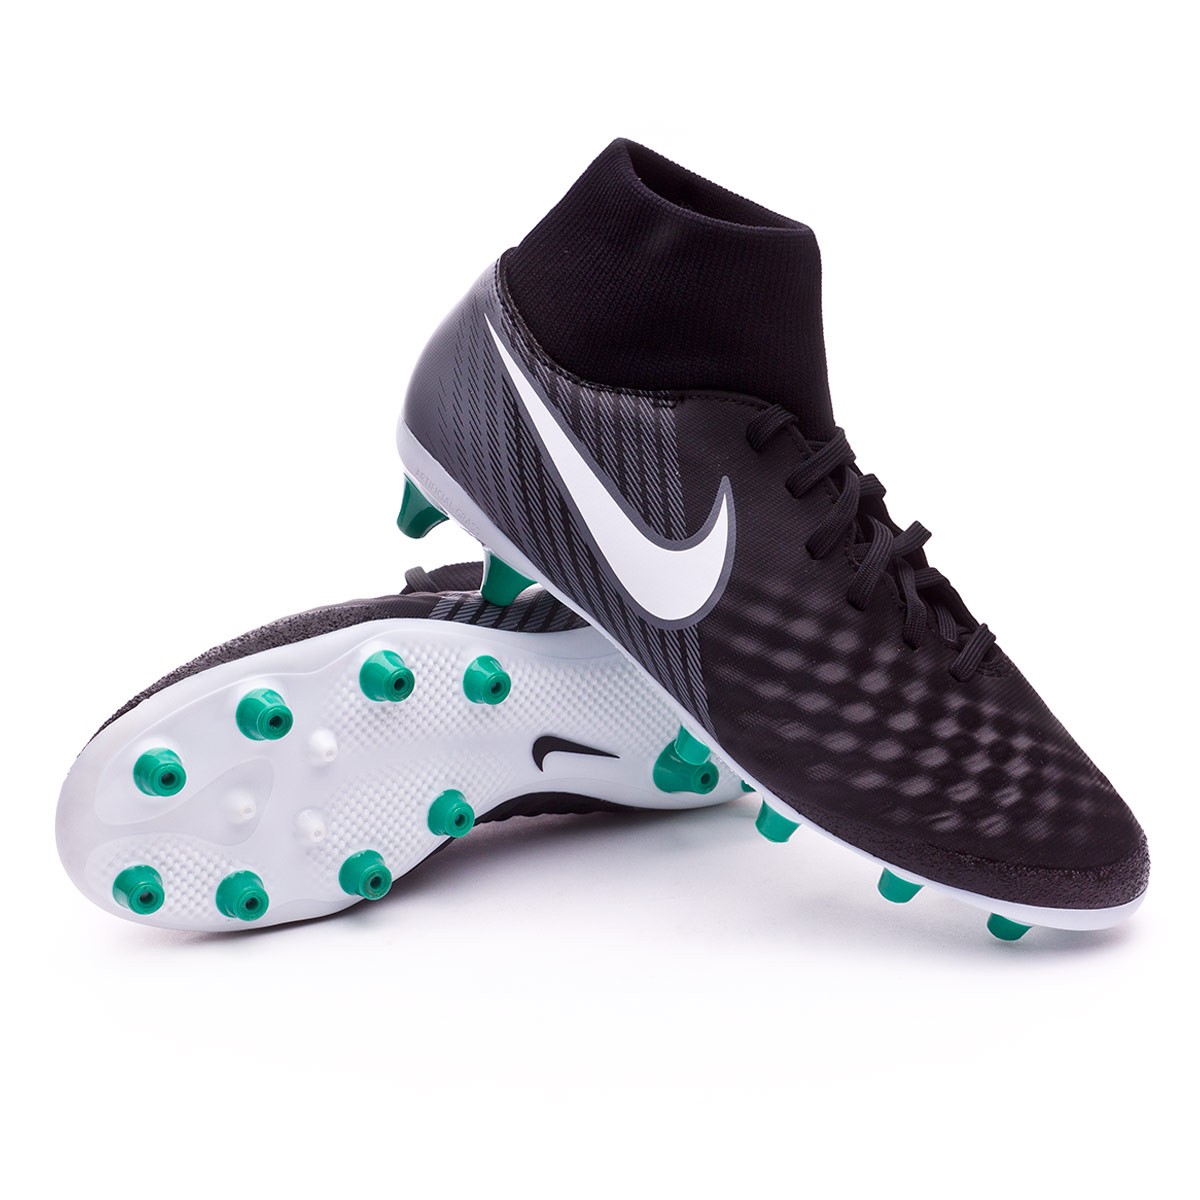 Men's Nike Football Boots Nike Magista Obra II FG Rio Teal